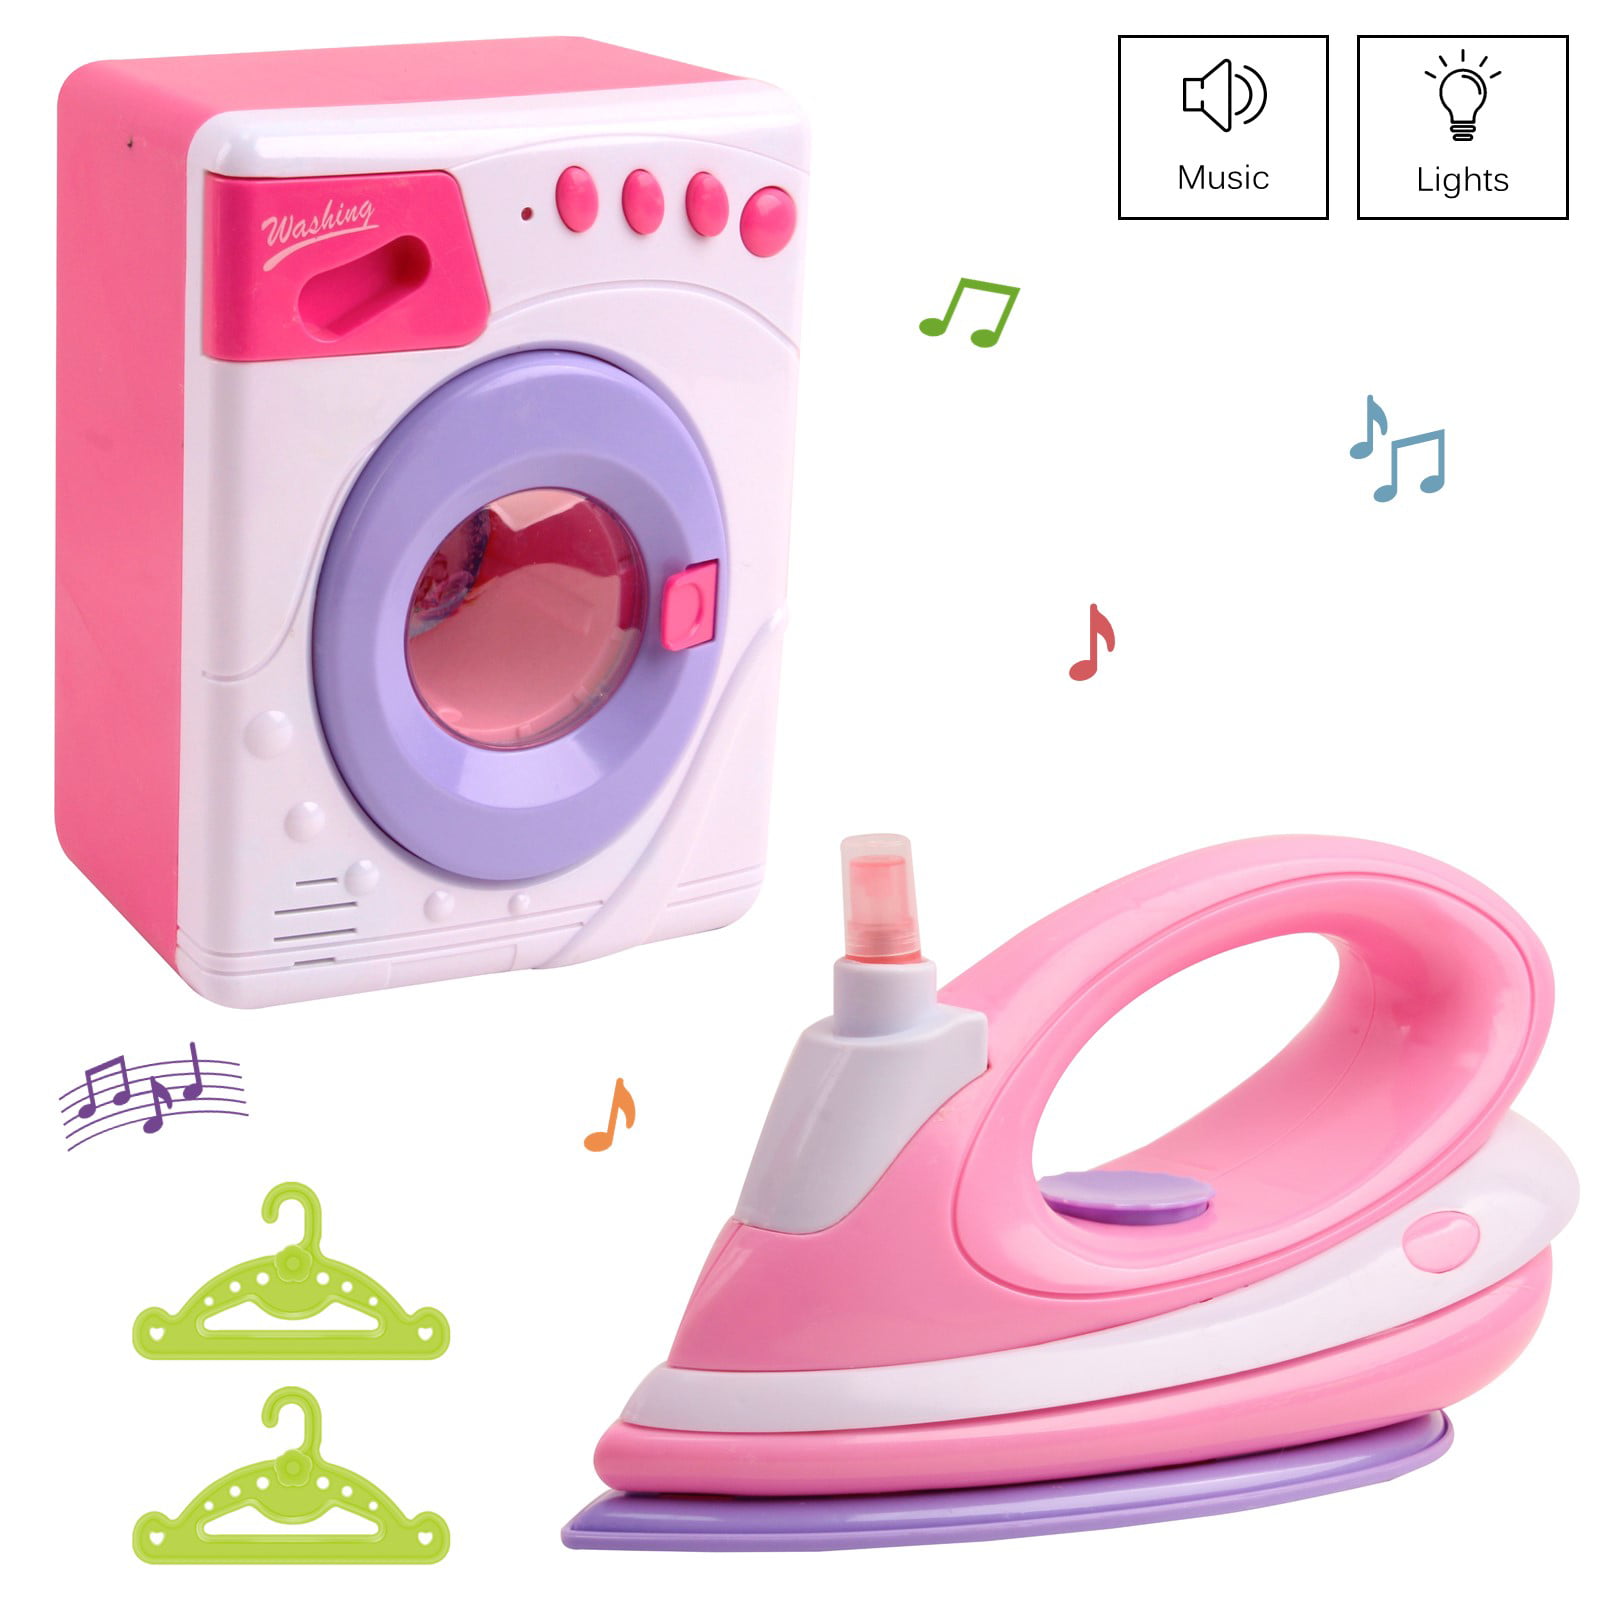 COLORTREE Housekeeping Playset Electric Iron& Washing Machine for Kids